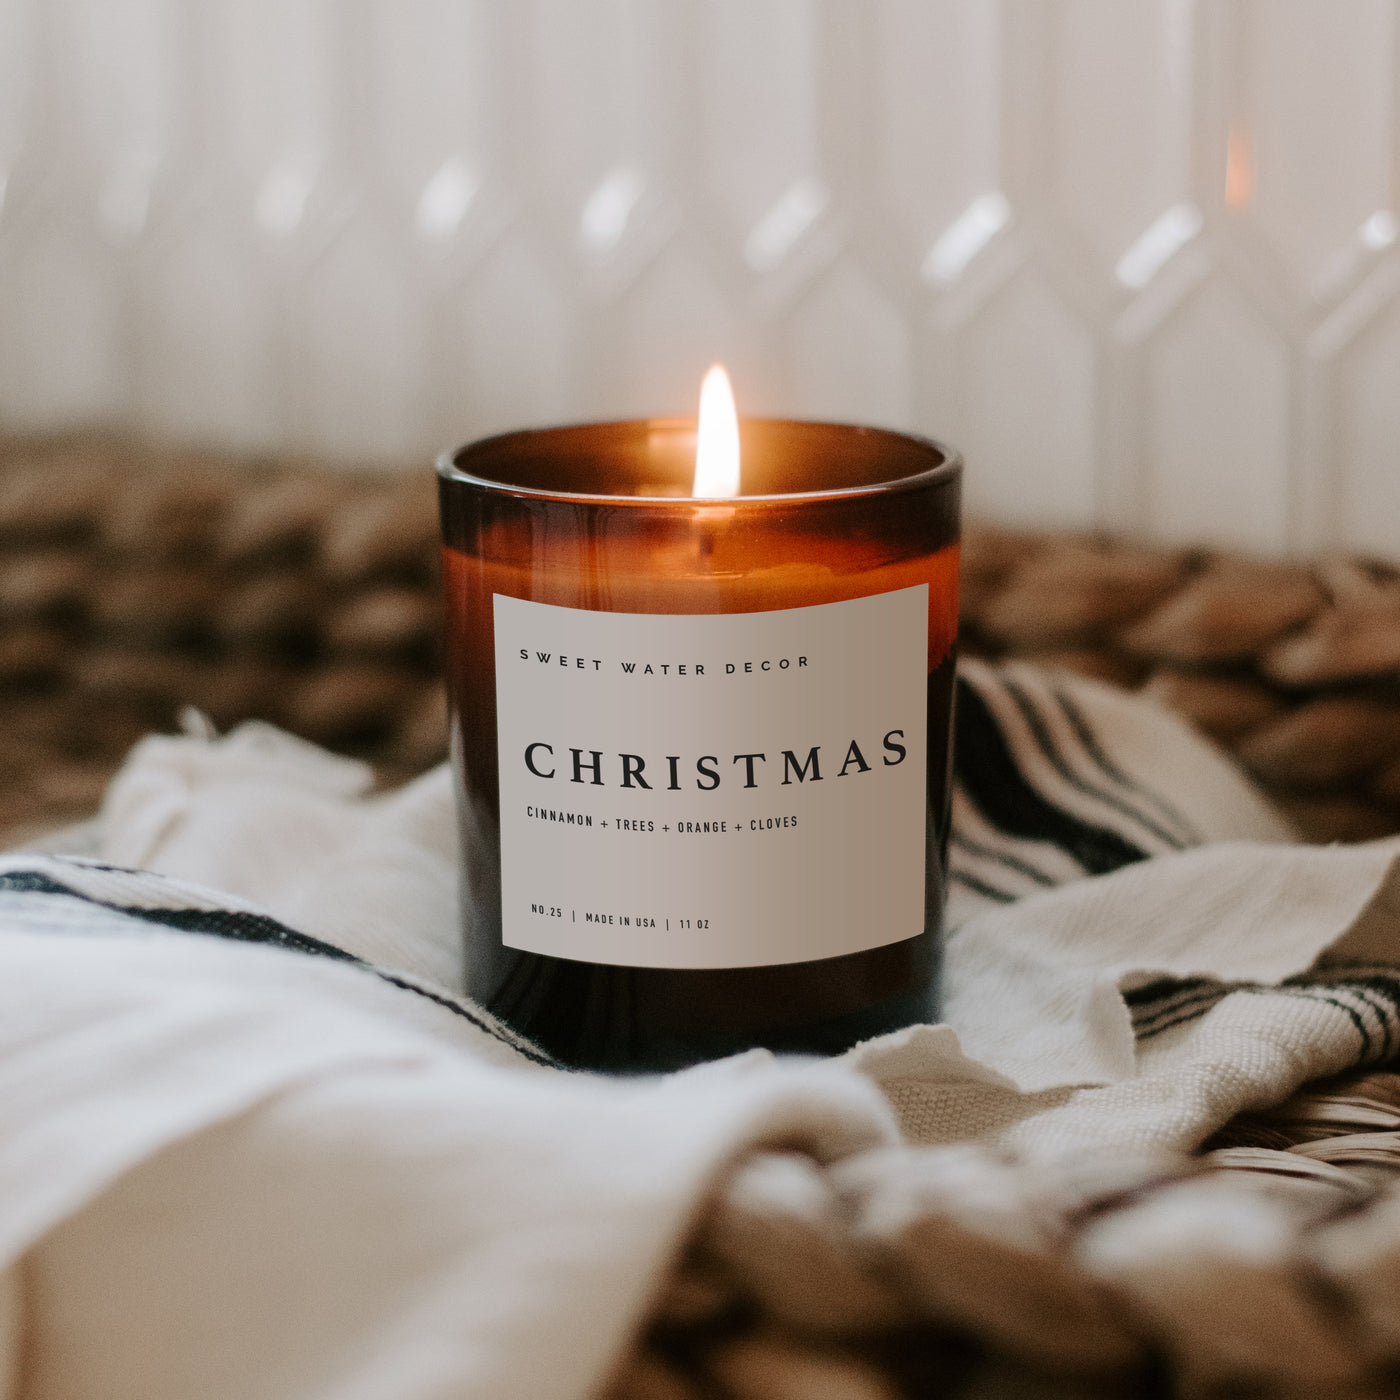 Christmas Soy Candle - Amber Jar - 11 oz